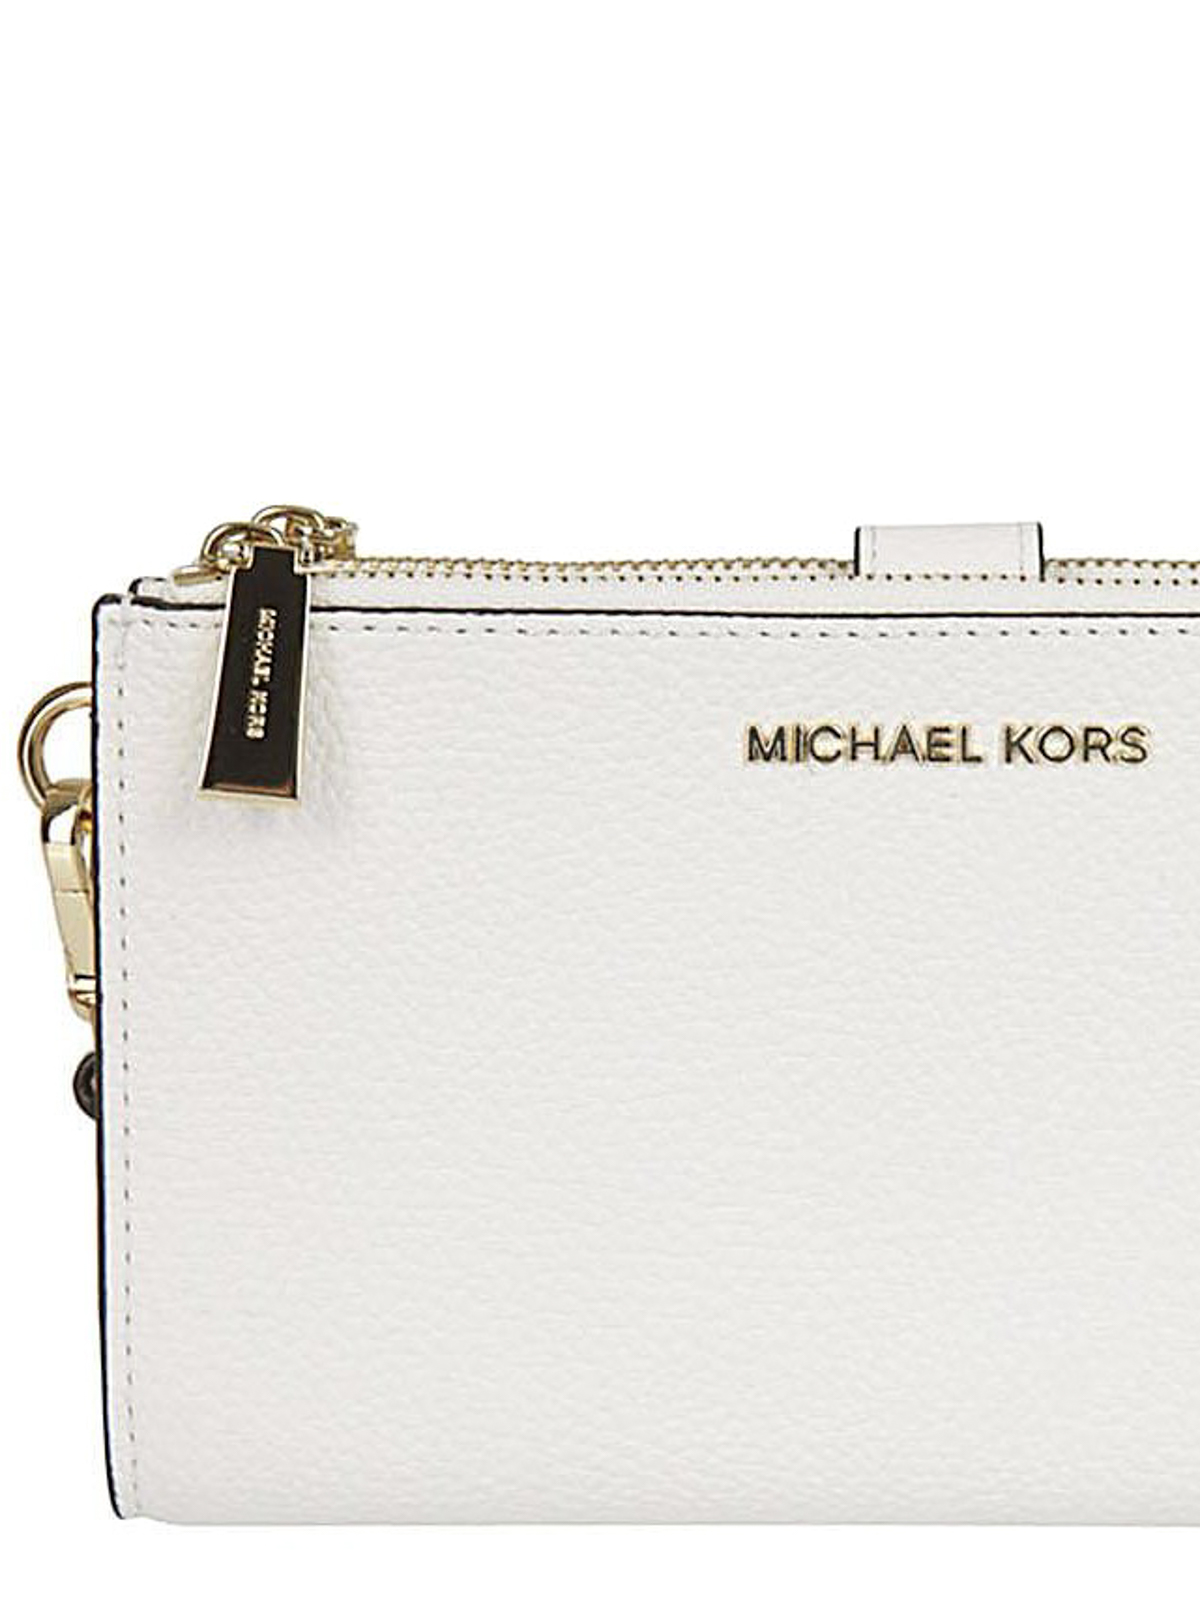 michael kors wallet white